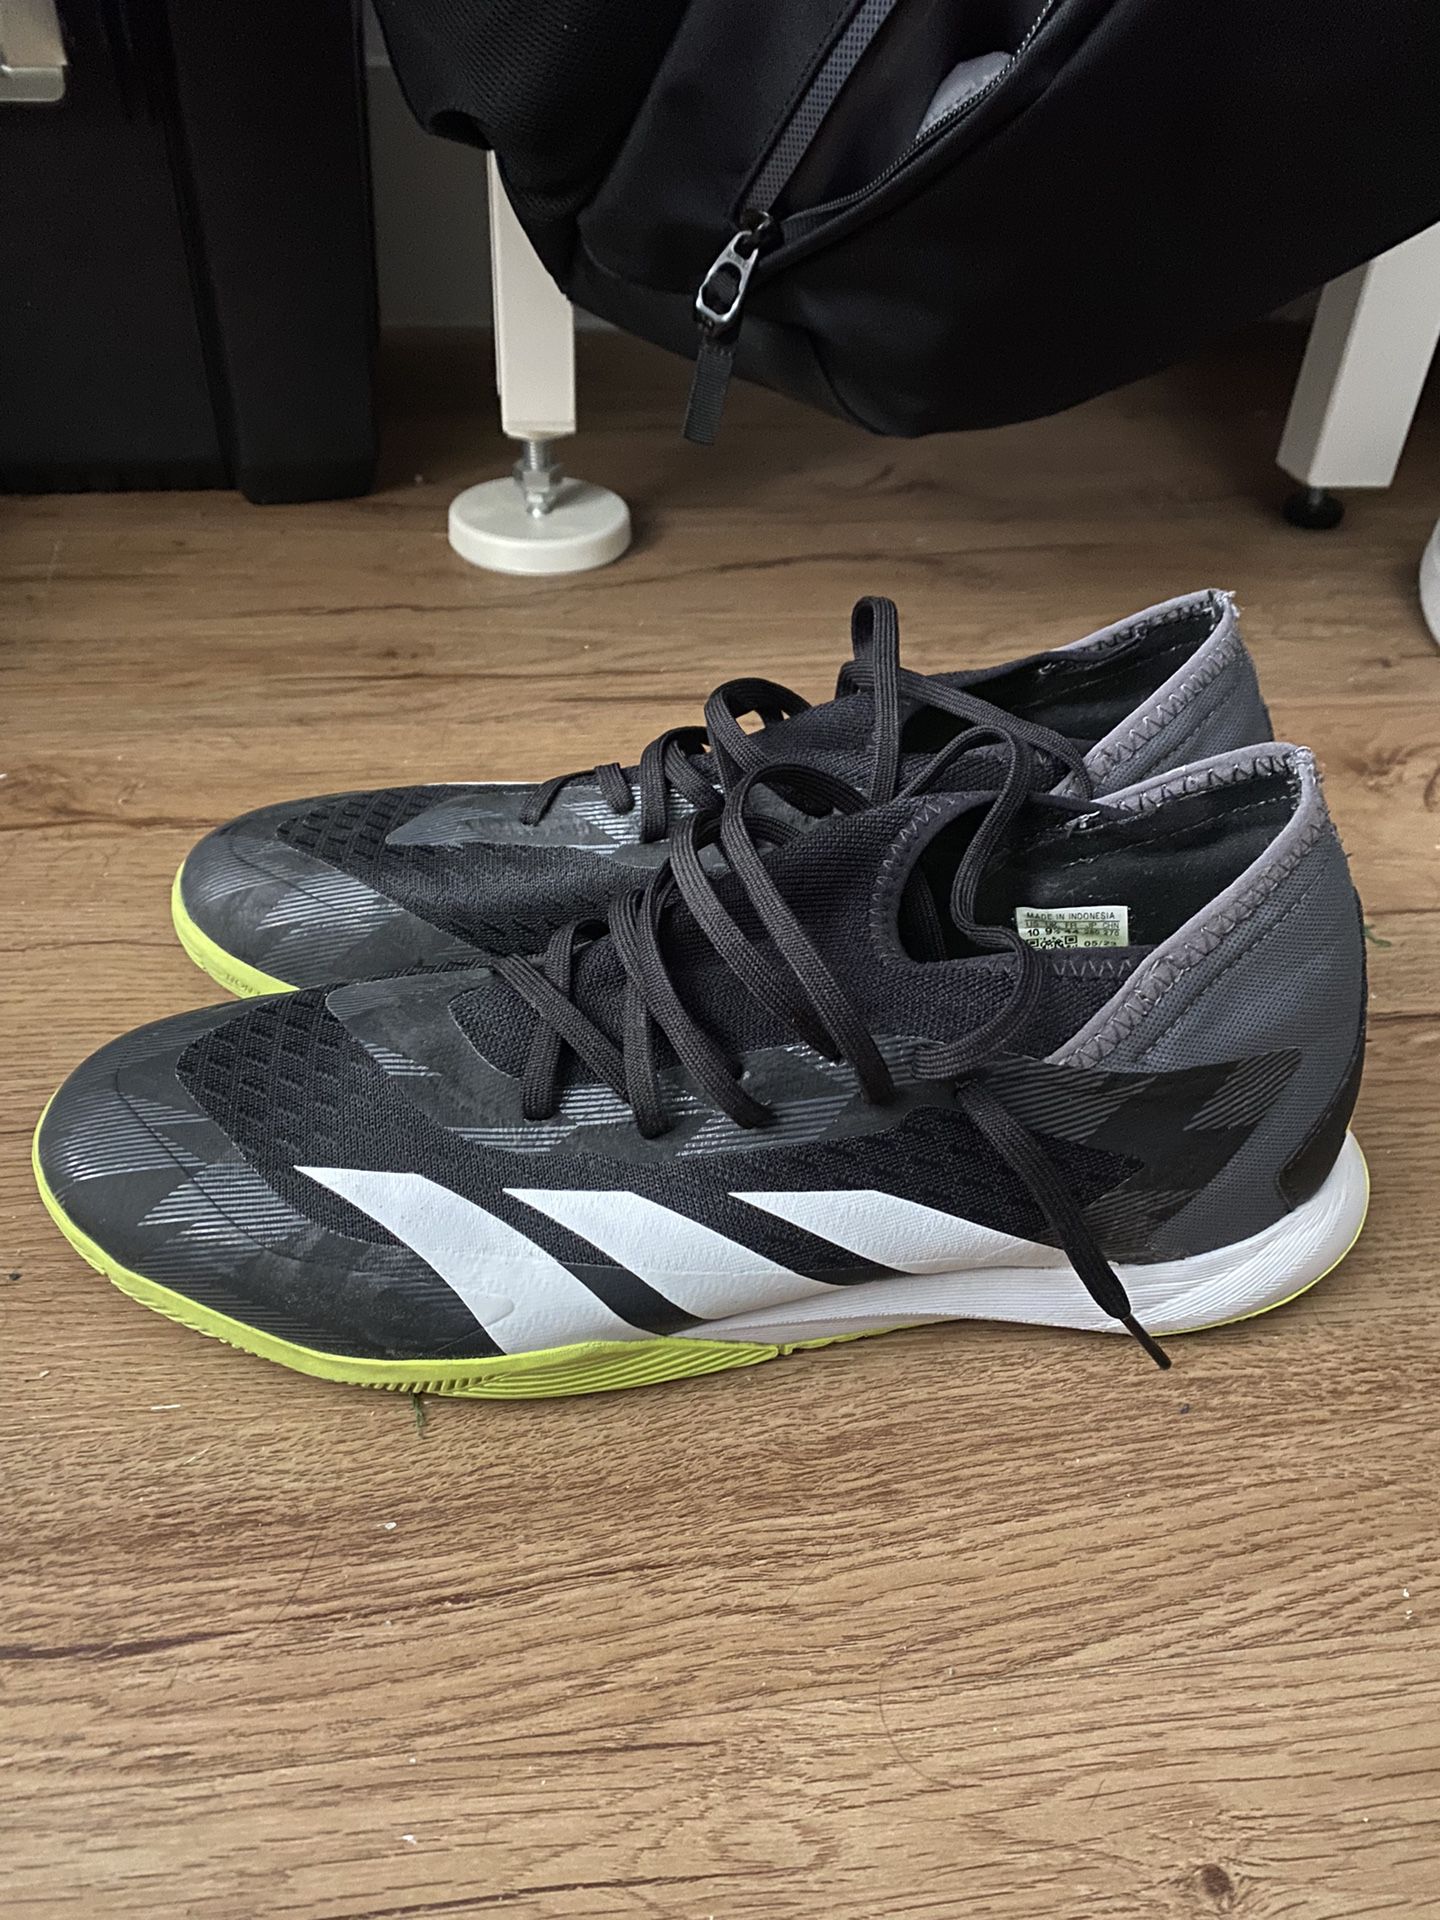 Adidas Predator Indoor Shoes. Size 10. 